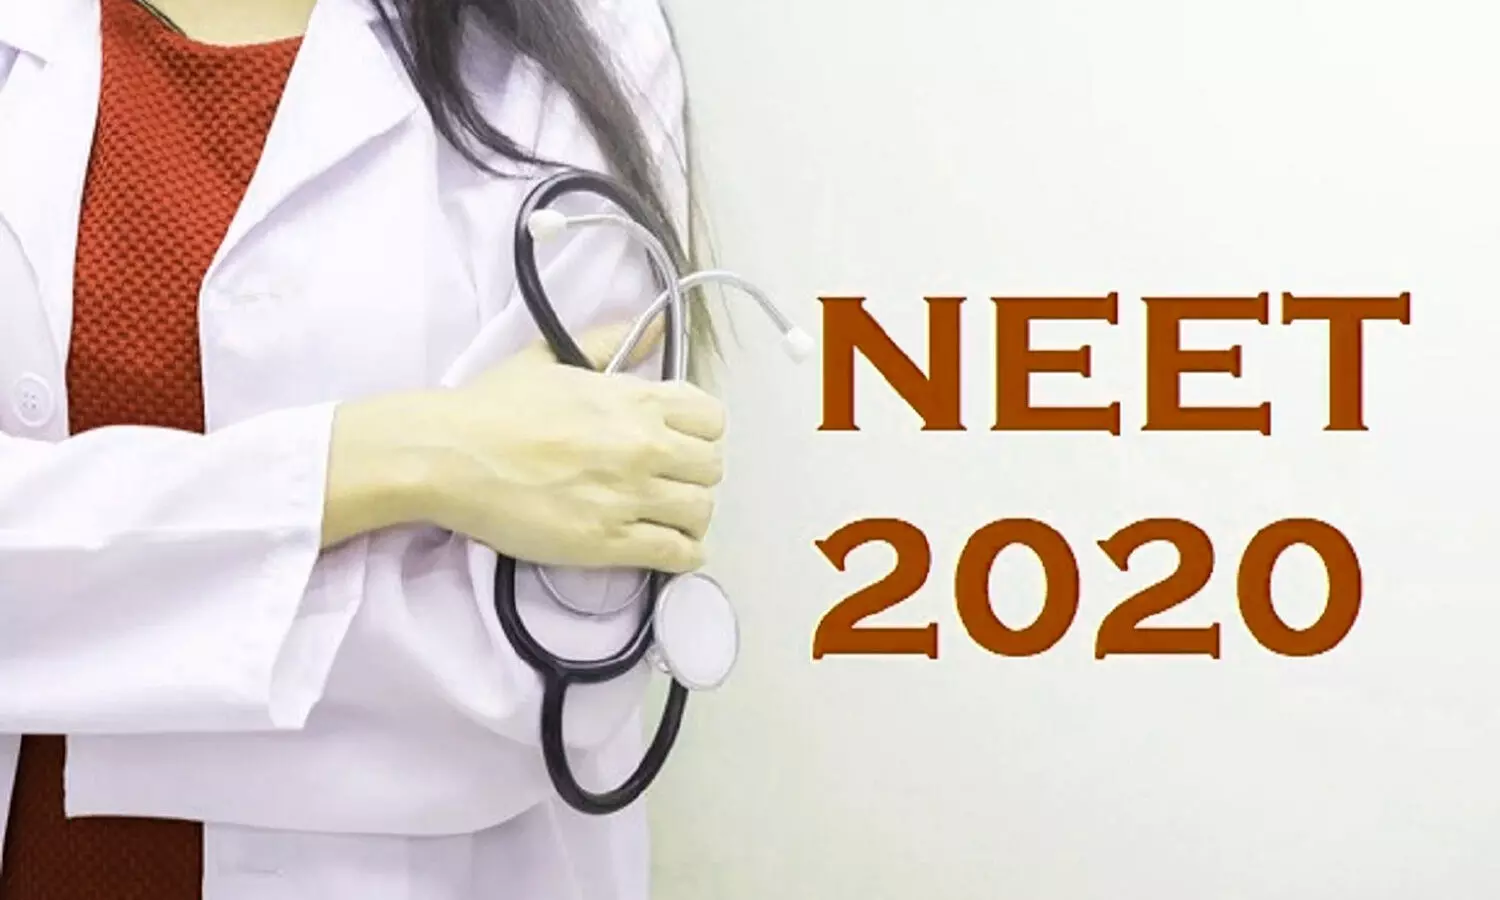 NO postponement on NEET 2020: SC dismisses petition